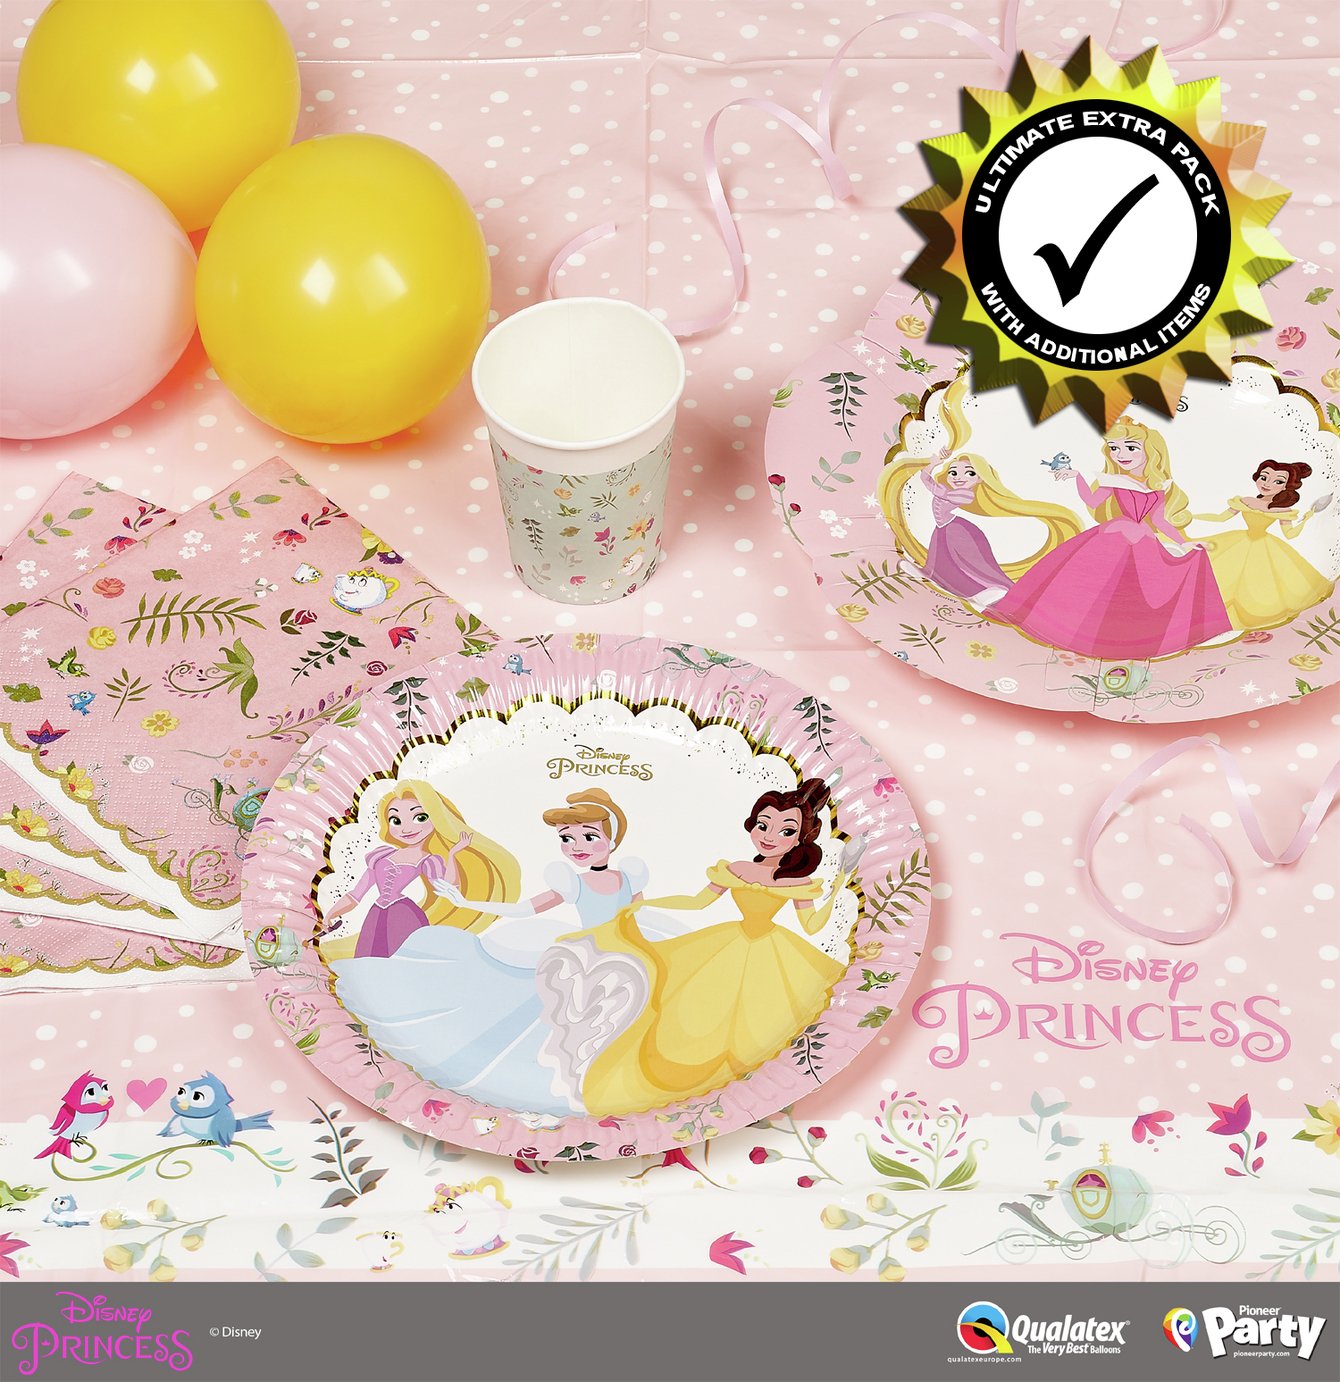 Disney Princess Premium Party Pack